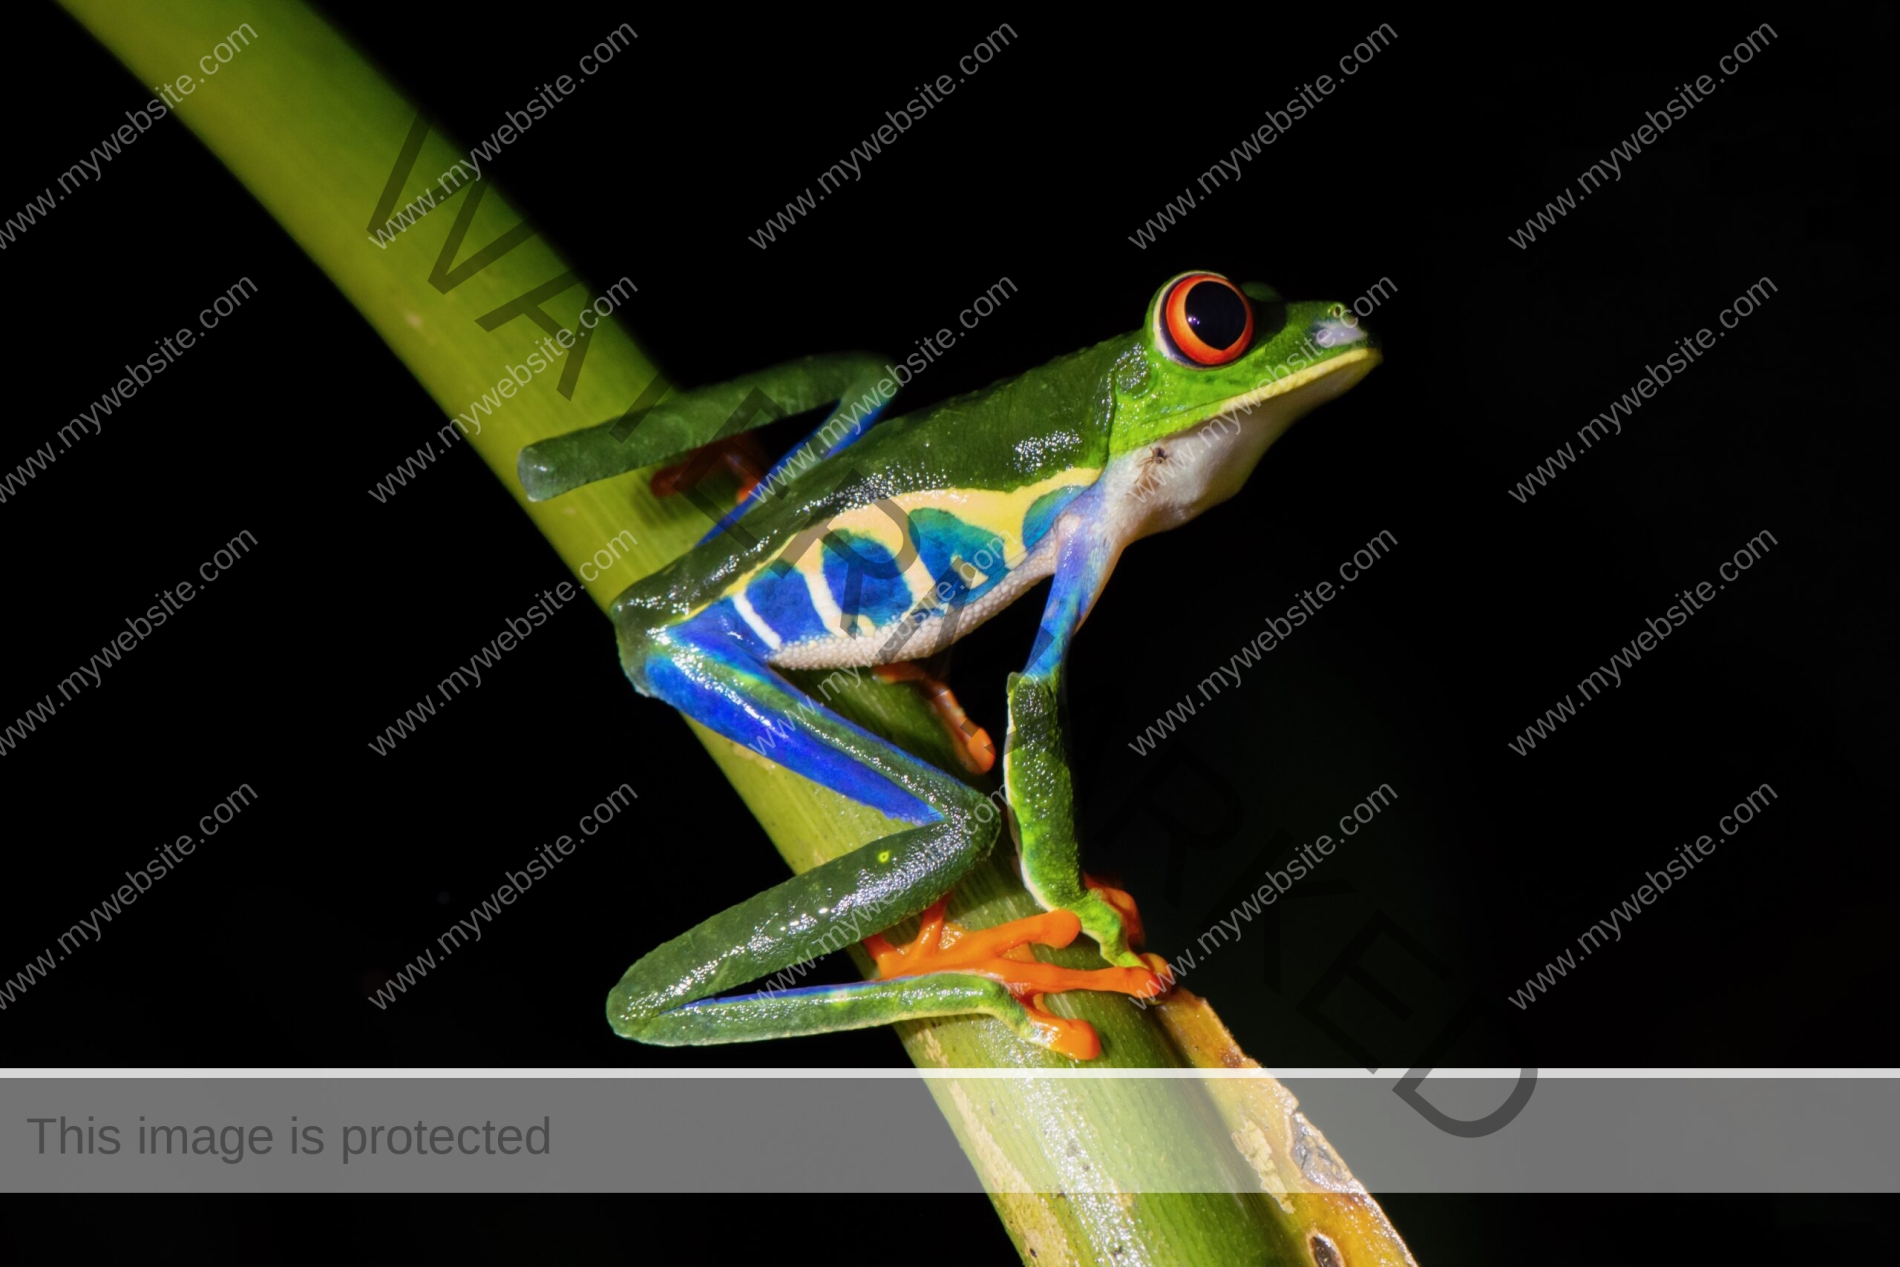 Caribbean Red-Eyed Tree Frog captured by wildlife photographer Edwar Herreno.